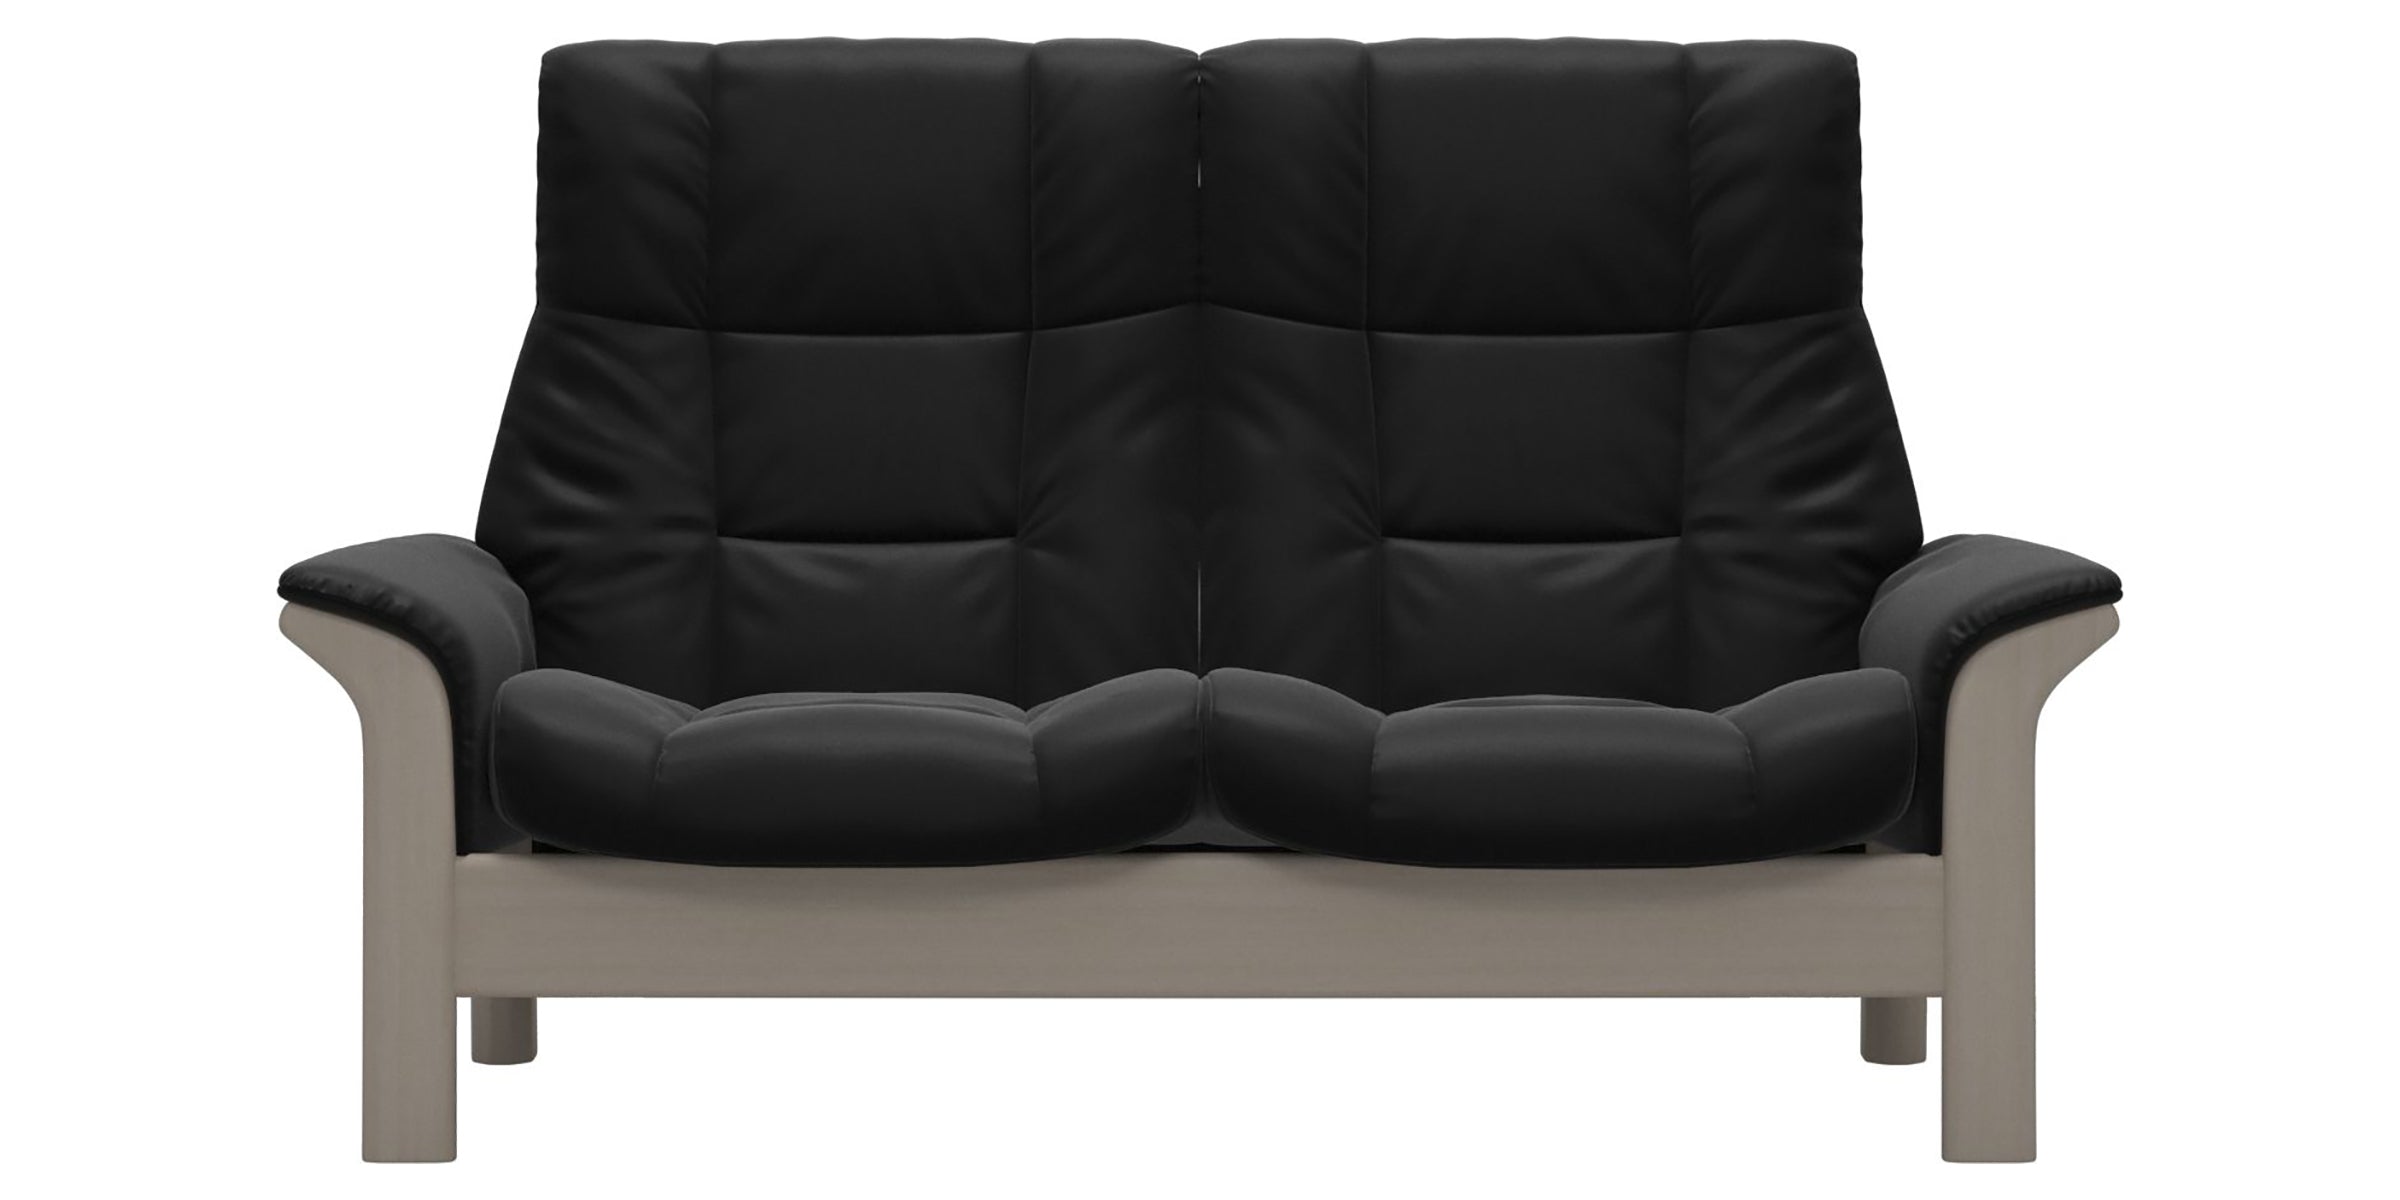 Paloma Leather Black and Whitewash Base | Stressless Buckingham 2-Seater High Back Sofa | Valley Ridge Furniture